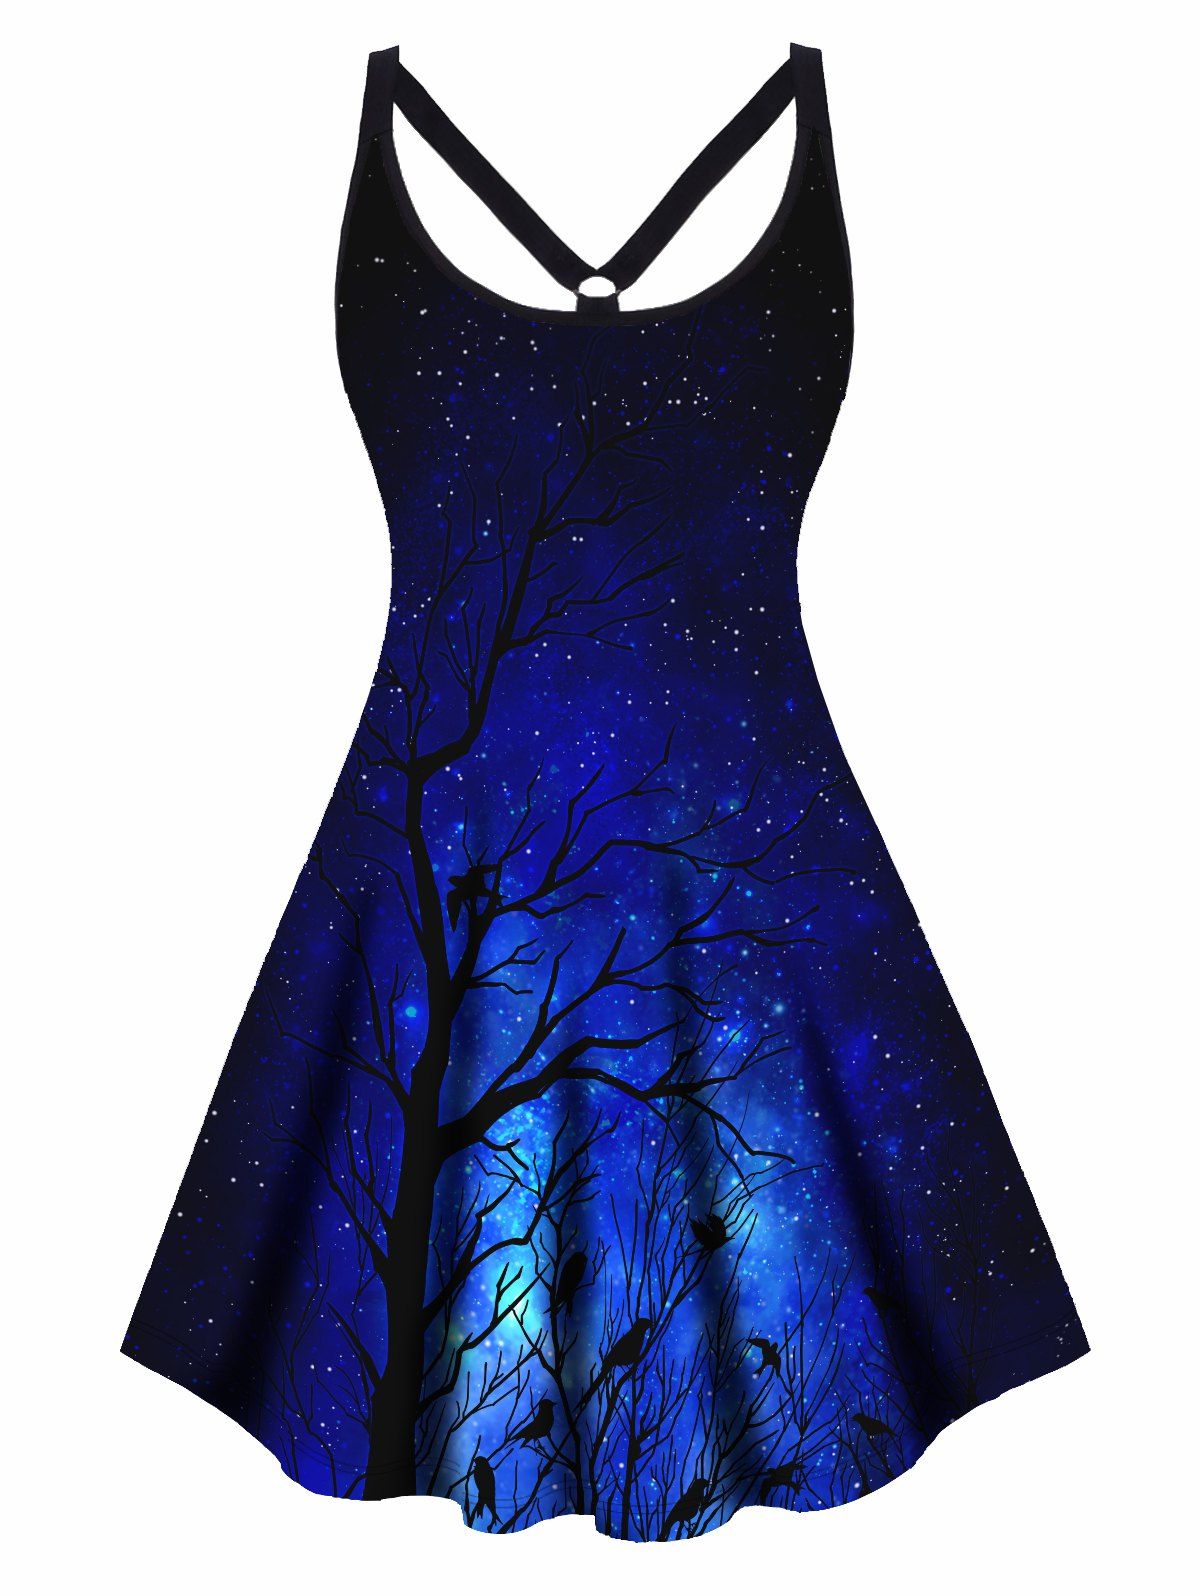 Plus Size Dress Galaxy Tree Branches Print Cut Out High Waisted A Line Mini Dress - BLACK L